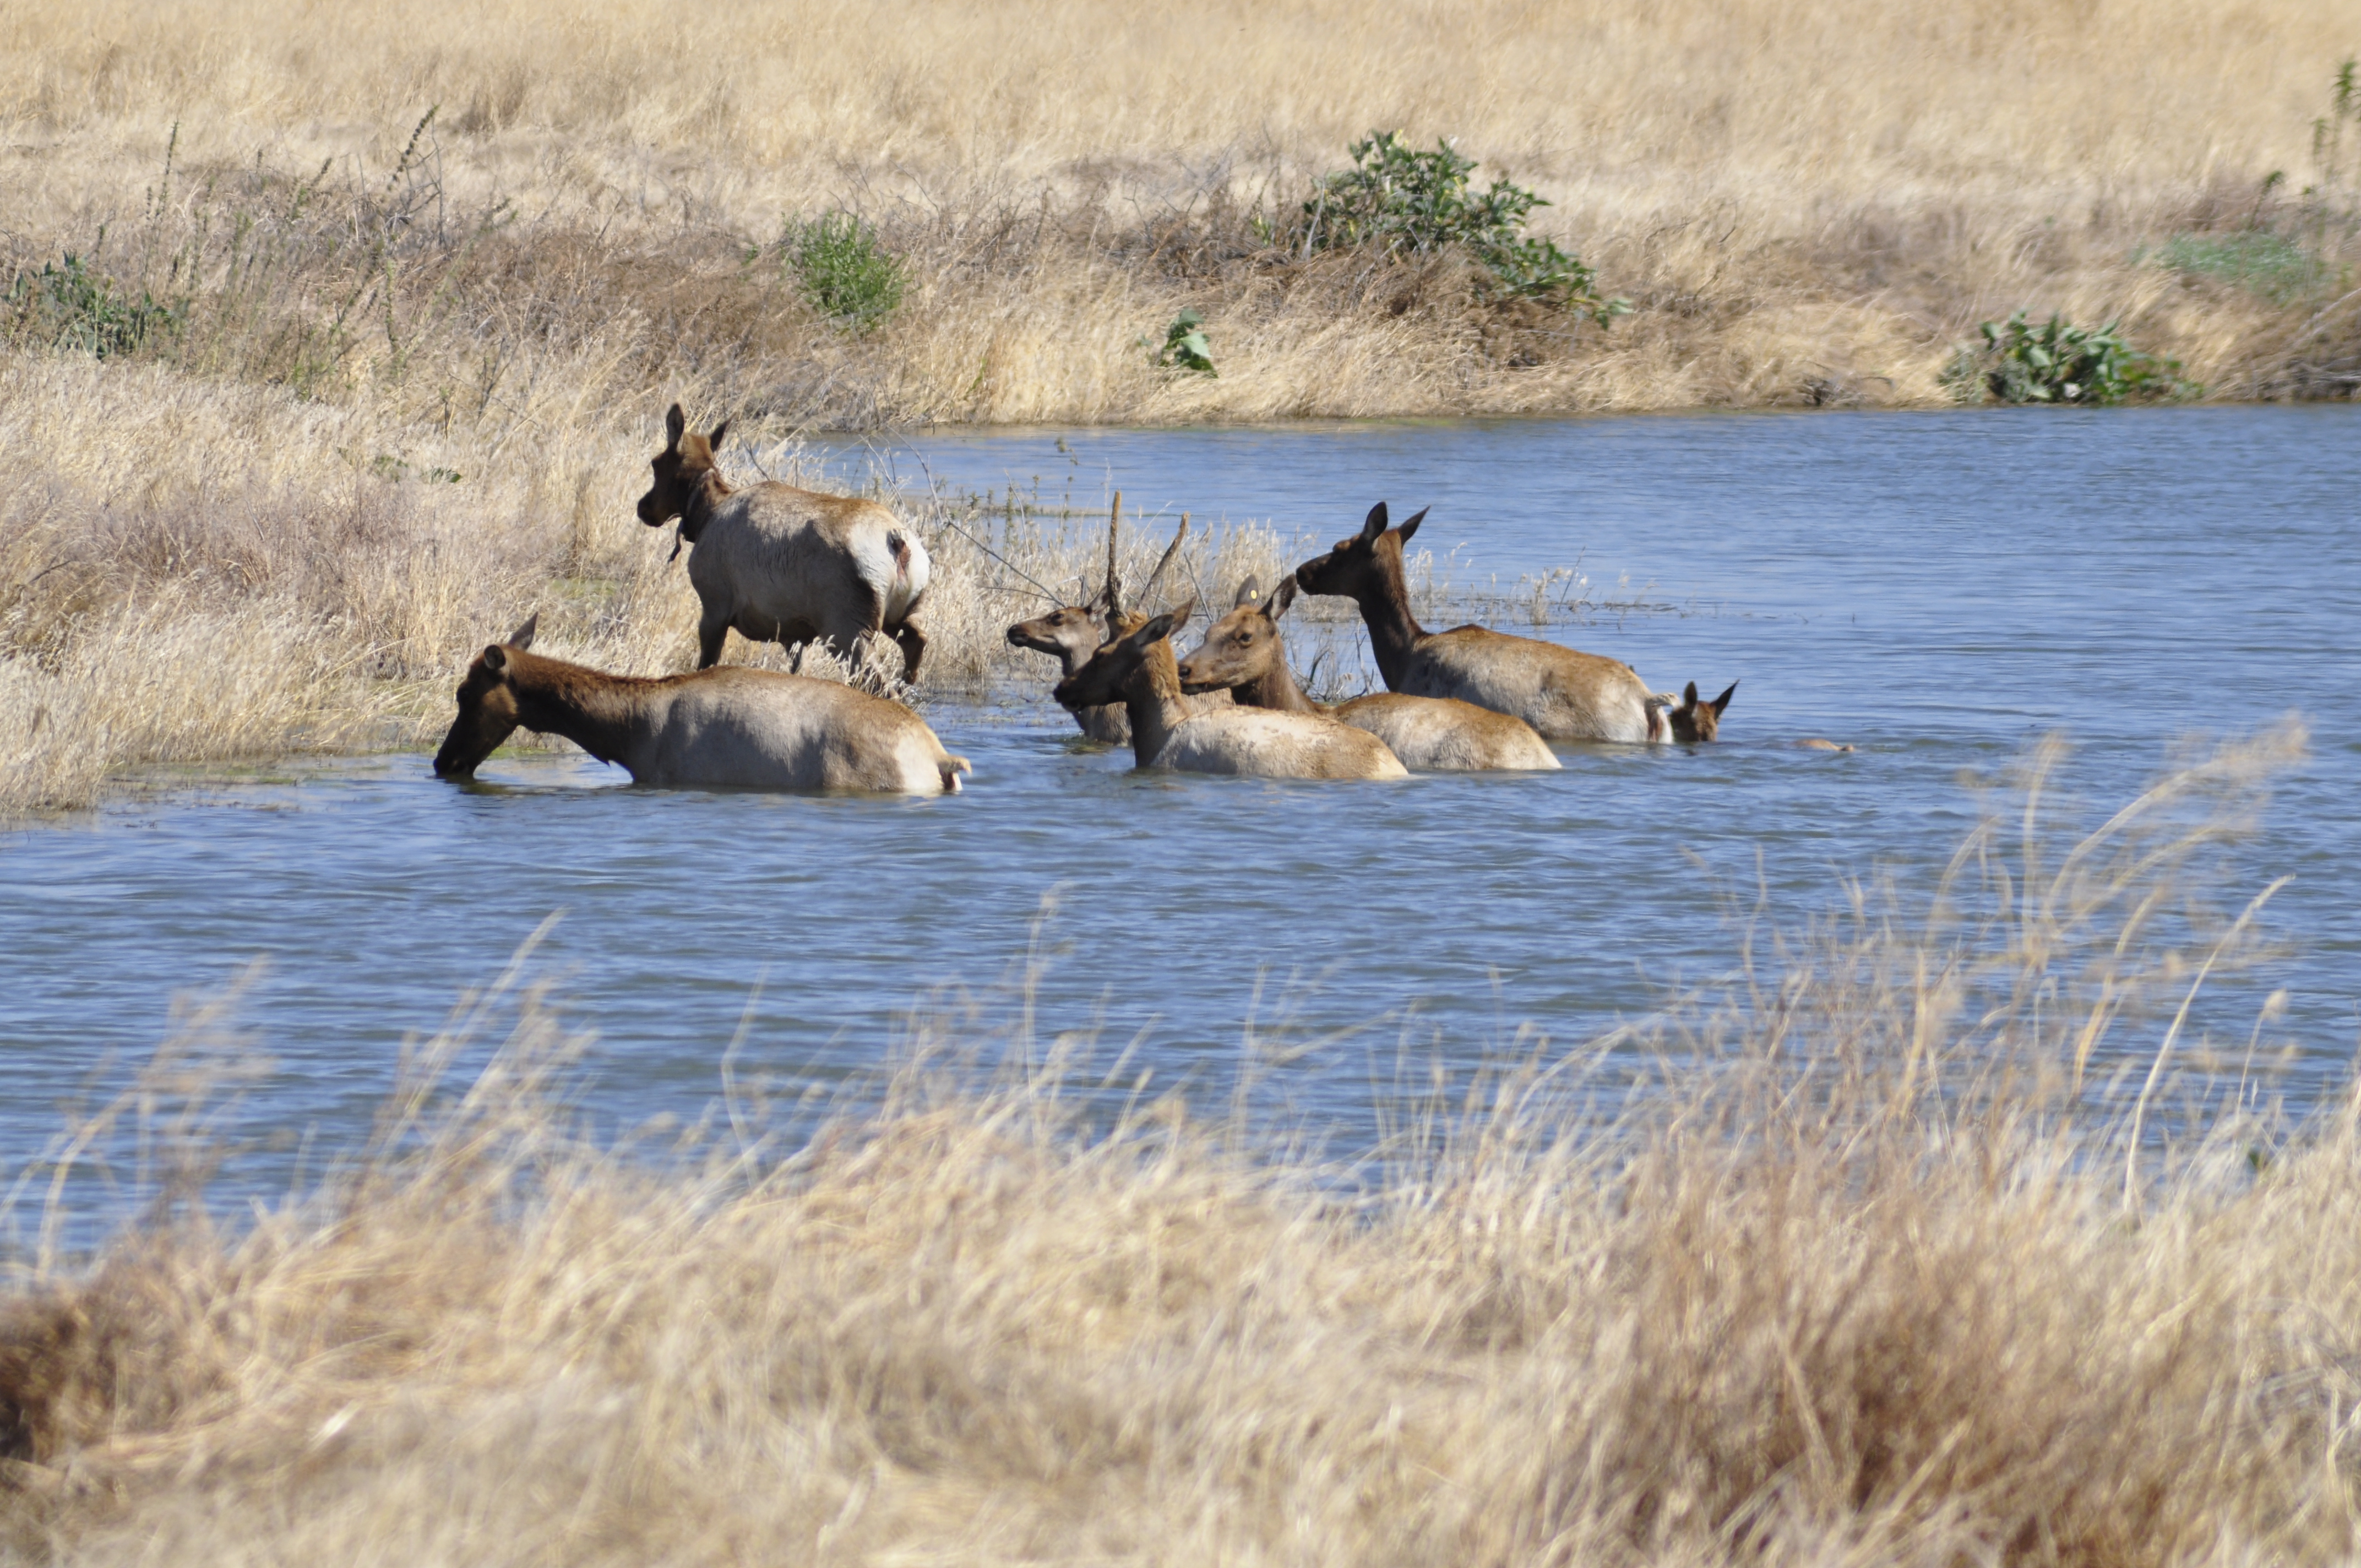 Tule Elk swimming